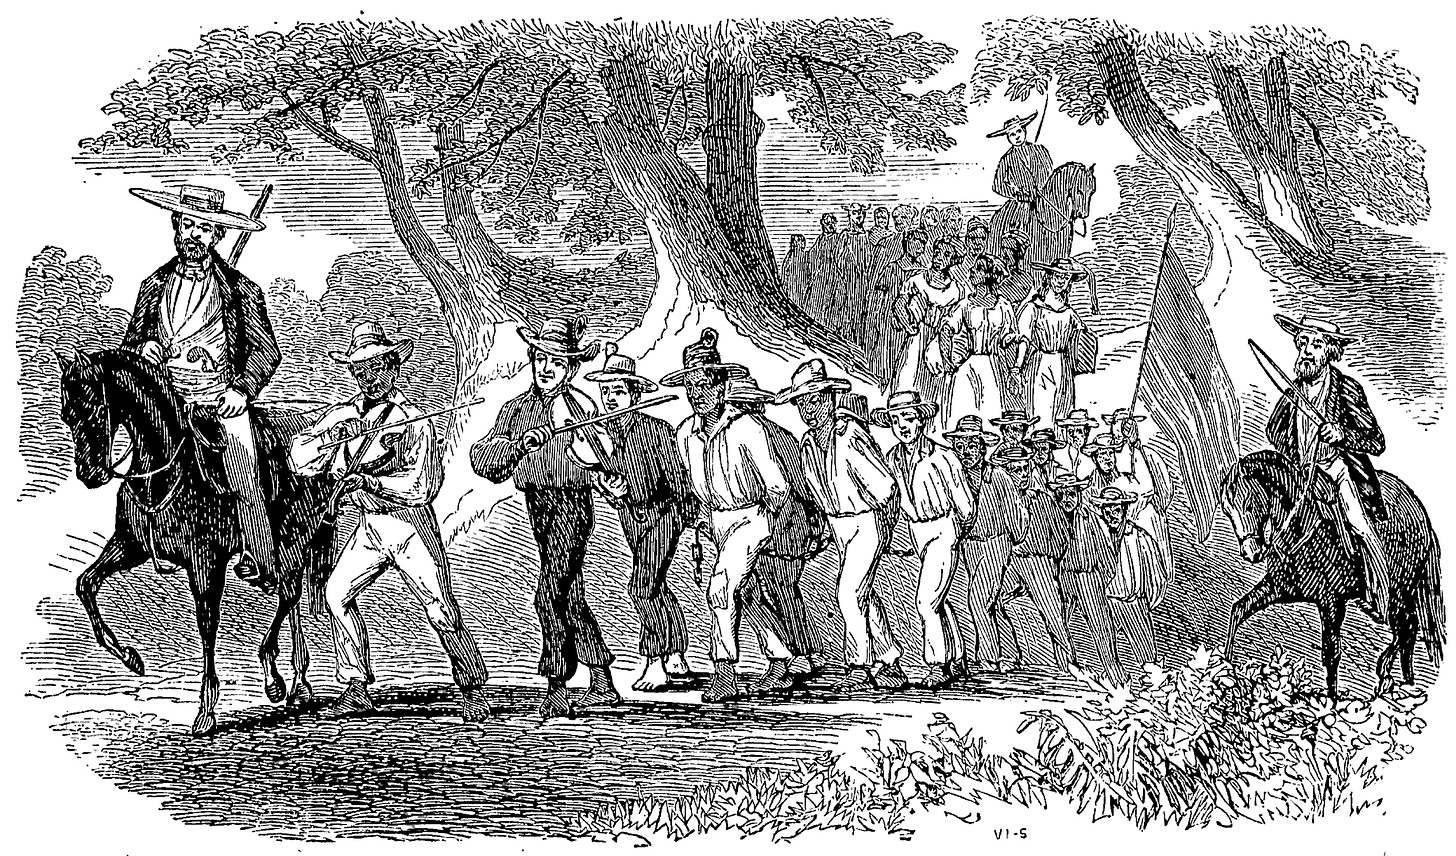 an anti-slavery engraving from the Civil War Era